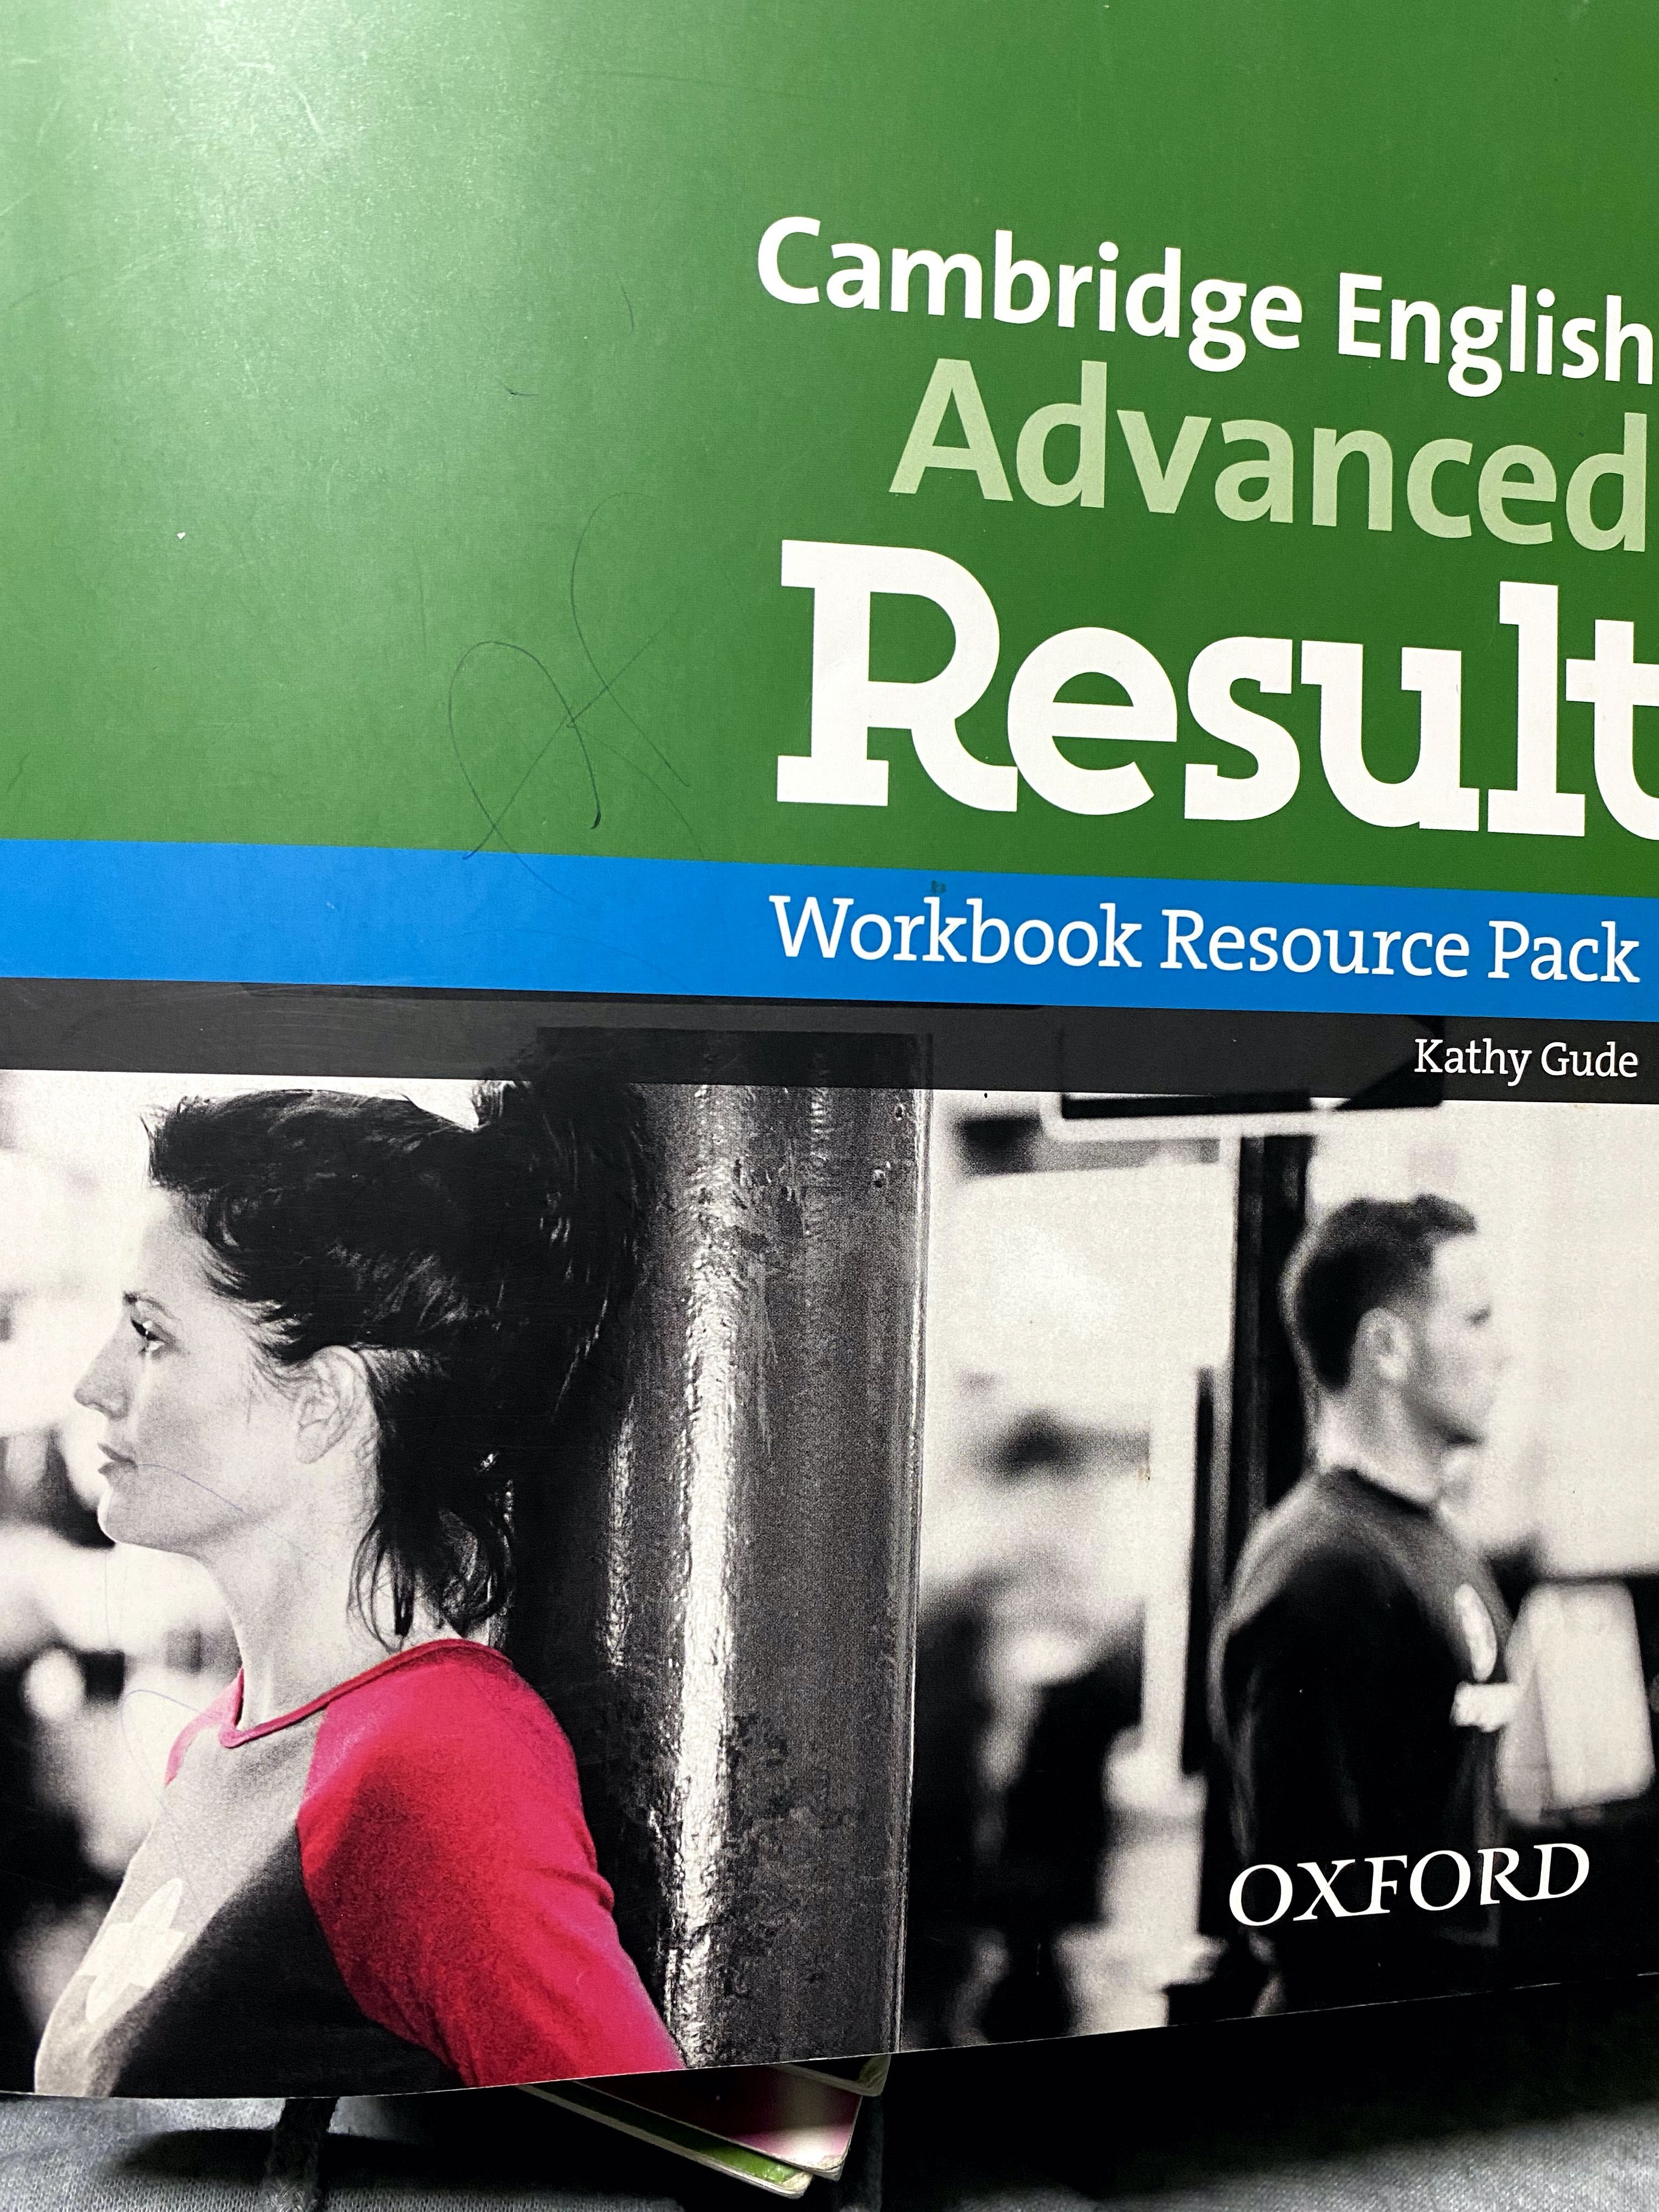 Cambridge English Advanced Result Workbook Audio CD
Kathy Gude